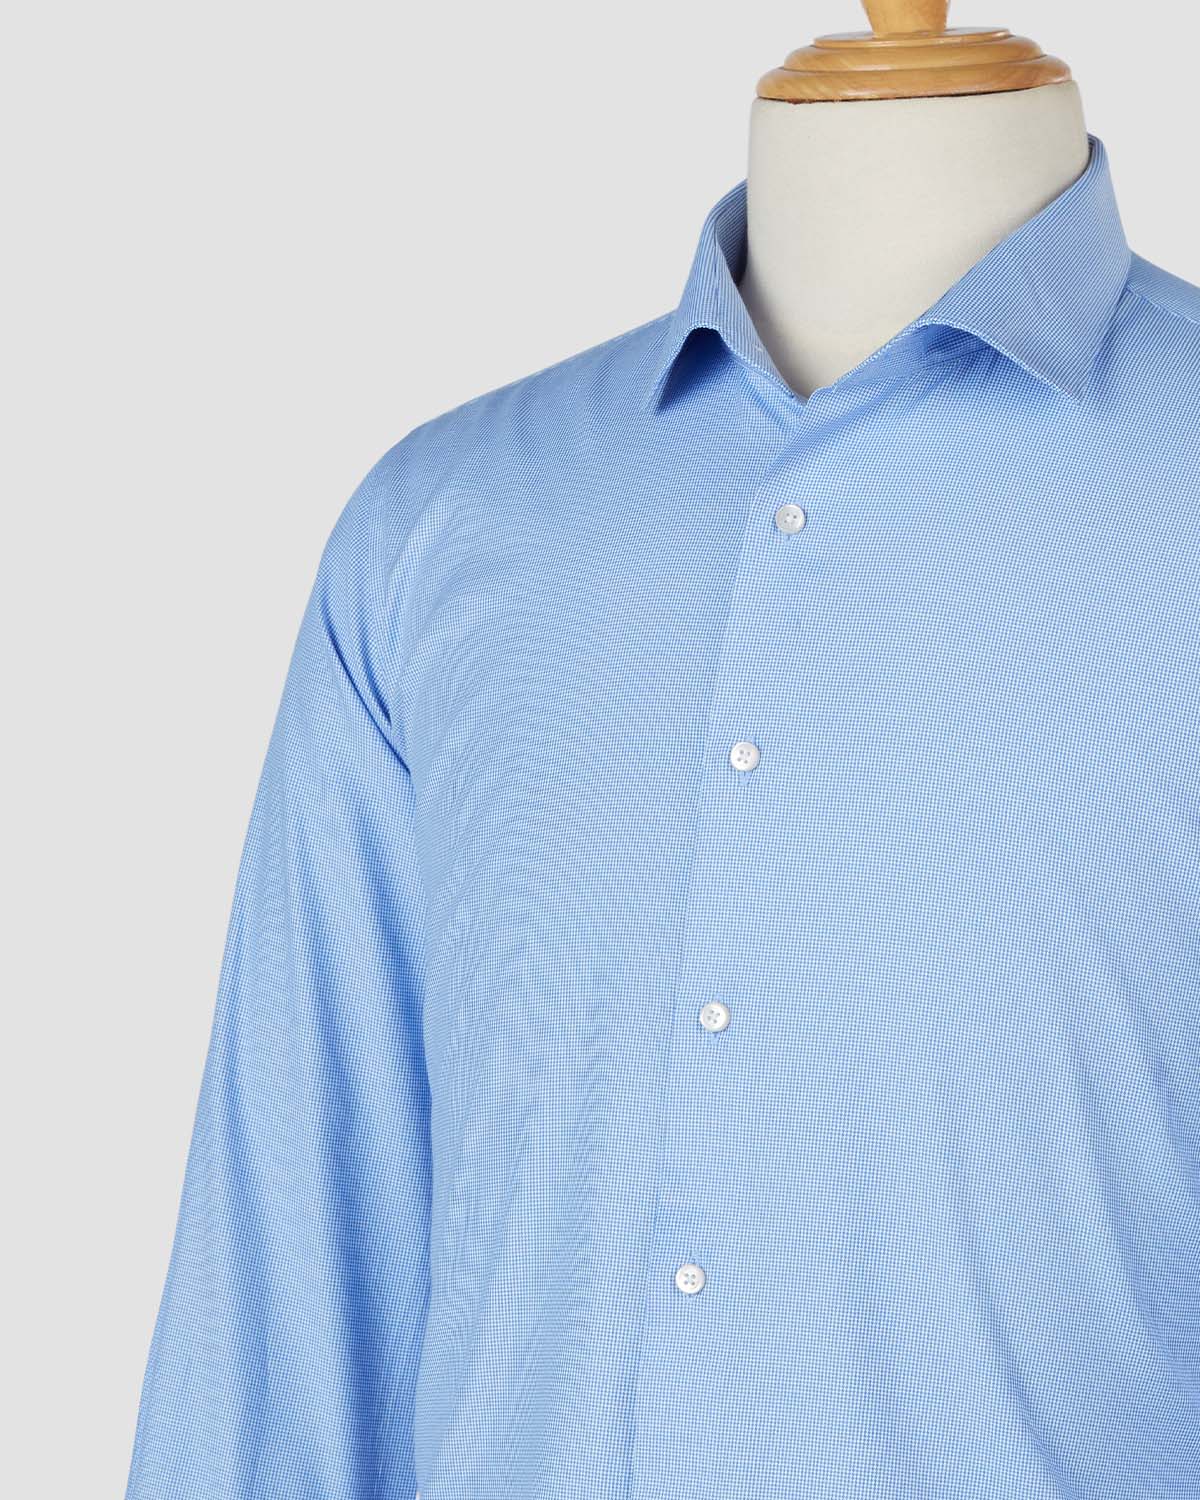 Bombay Shirt Company - Blue Lupine Houndstooth Shirt